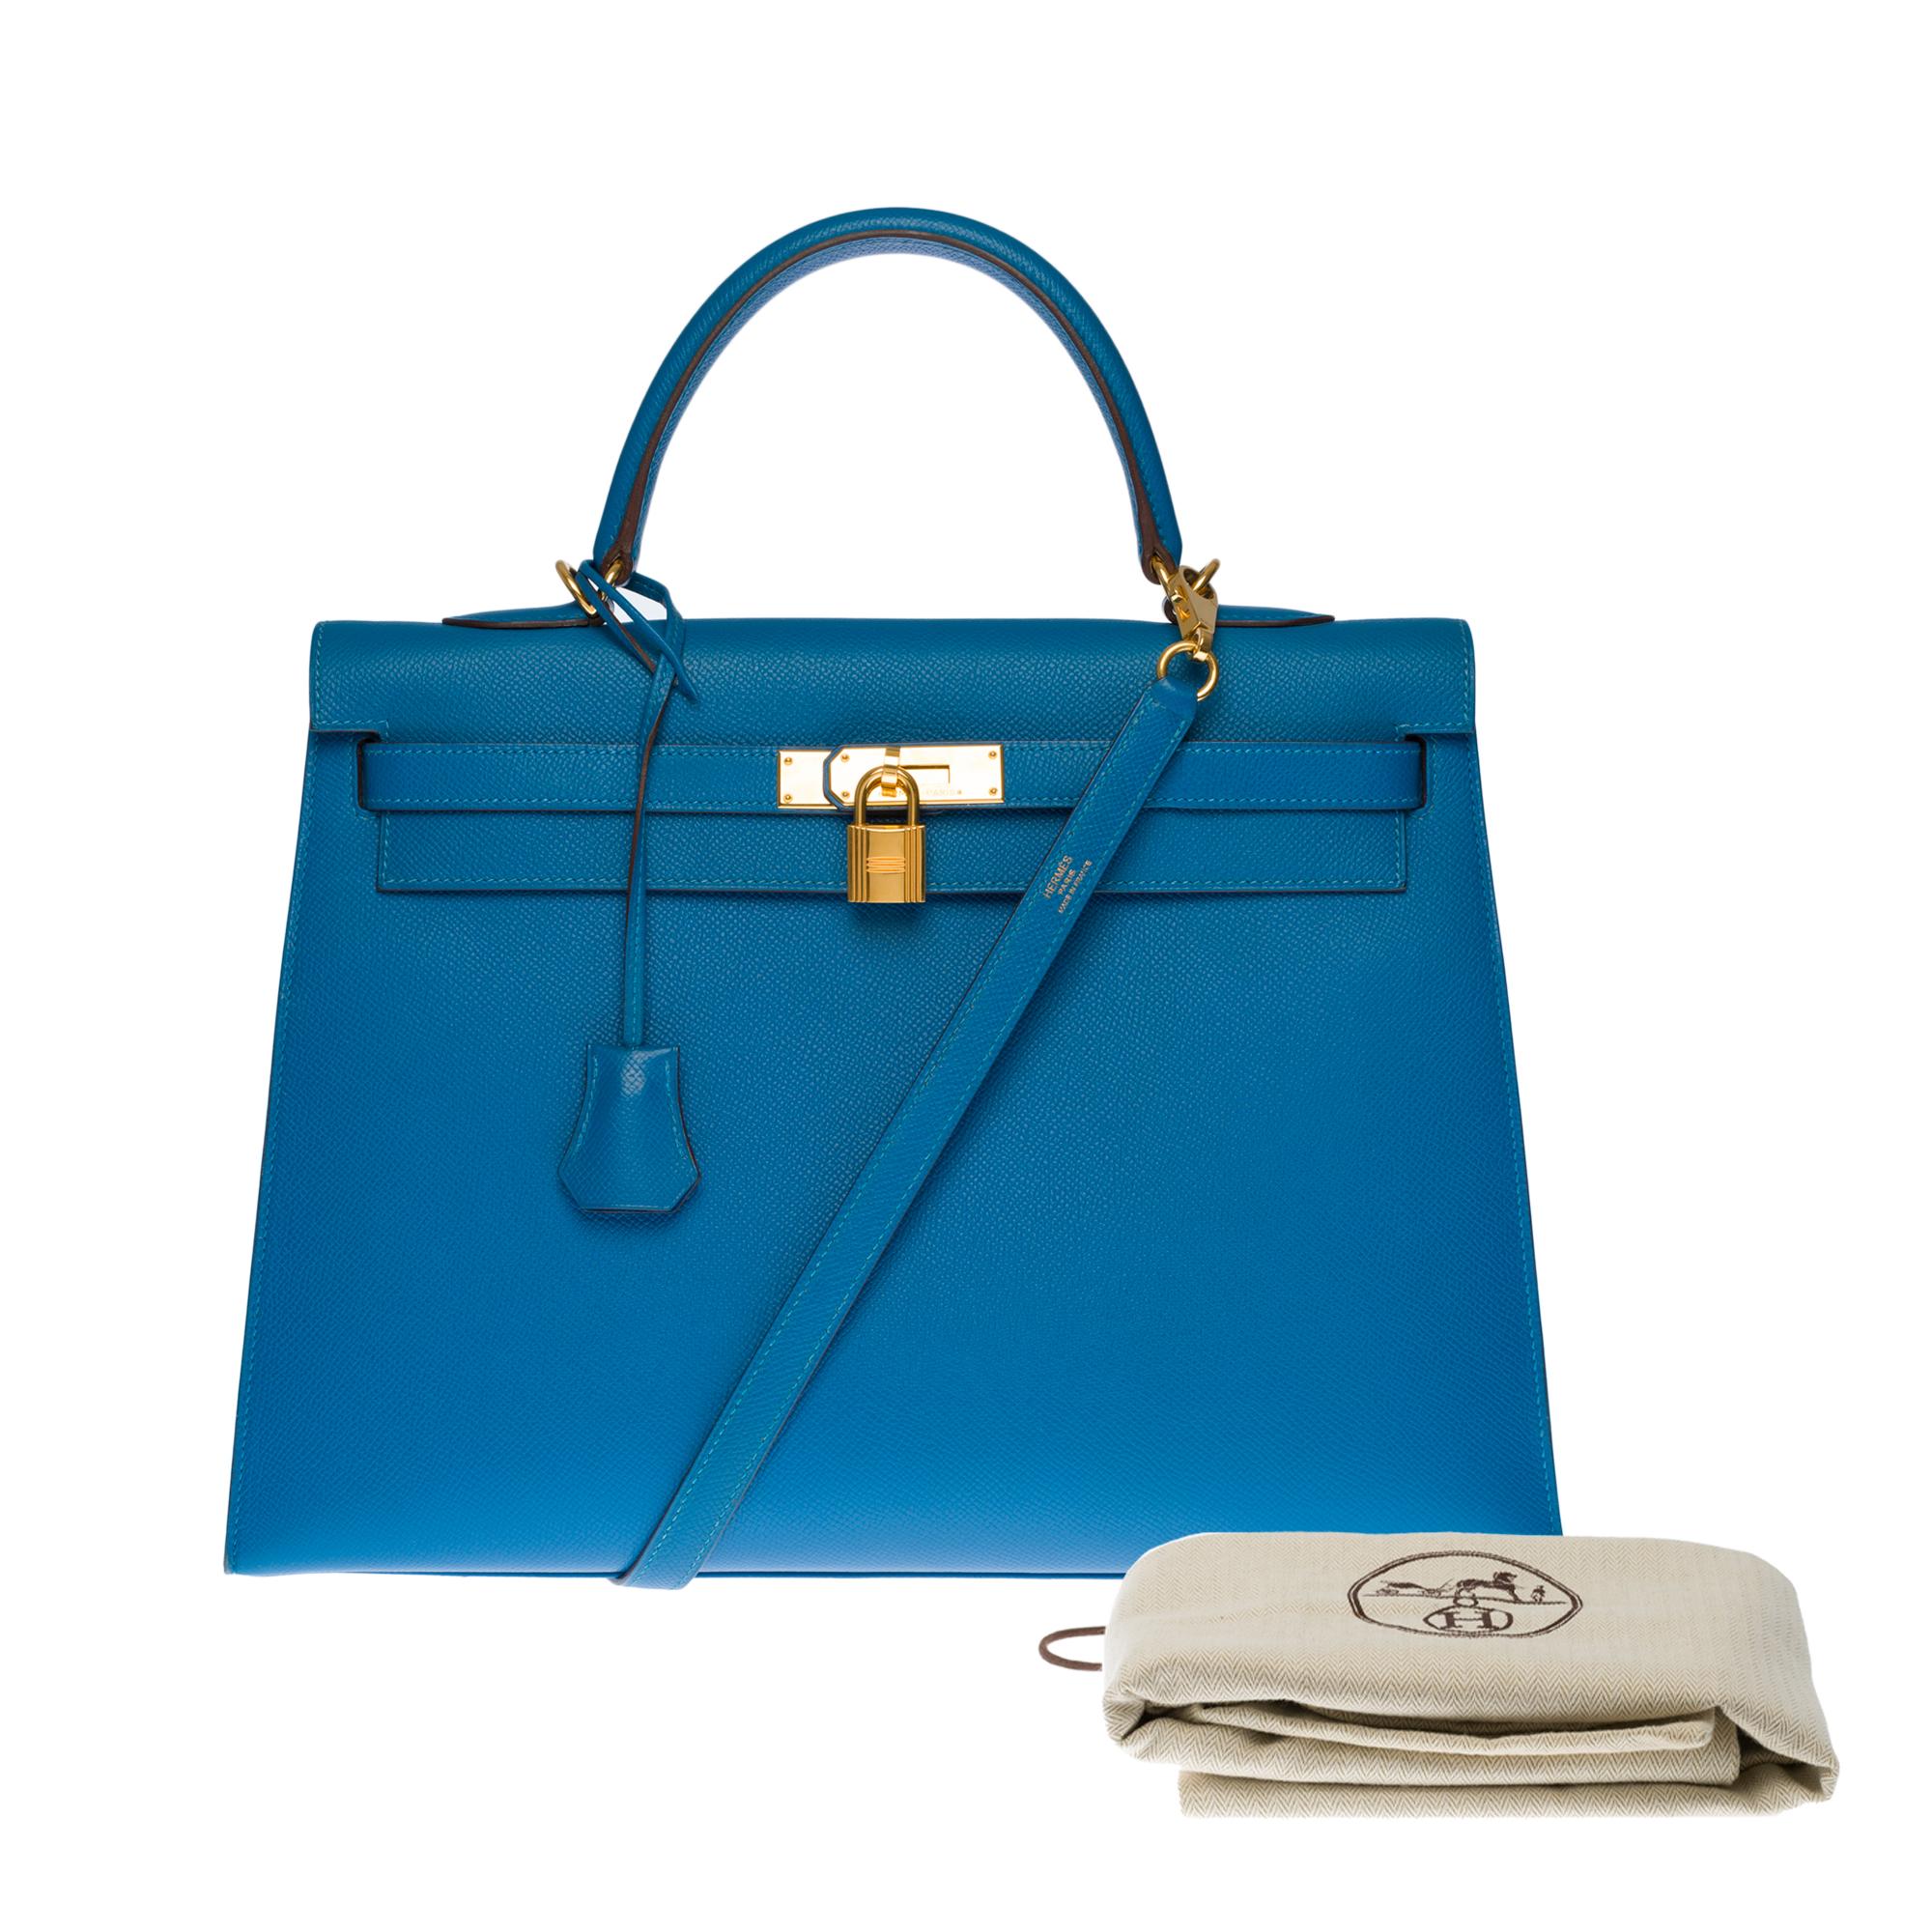 Stunning Hermès Kelly 35 sellier strap in Blue Mykonos Epsom leather, GHW 4